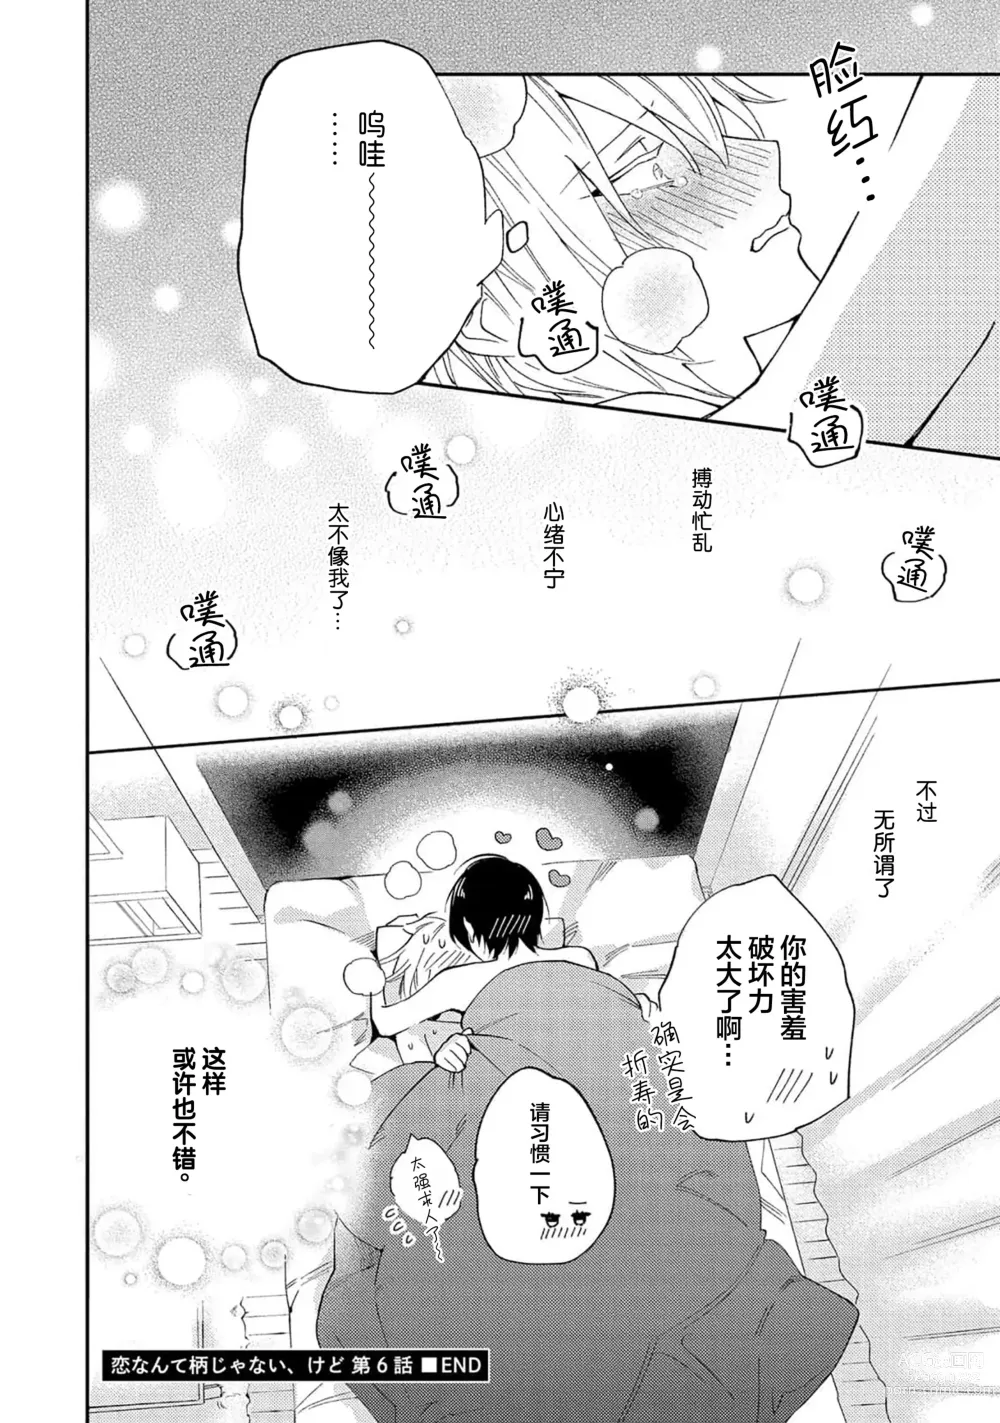 Page 154 of manga 虽说不善恋爱